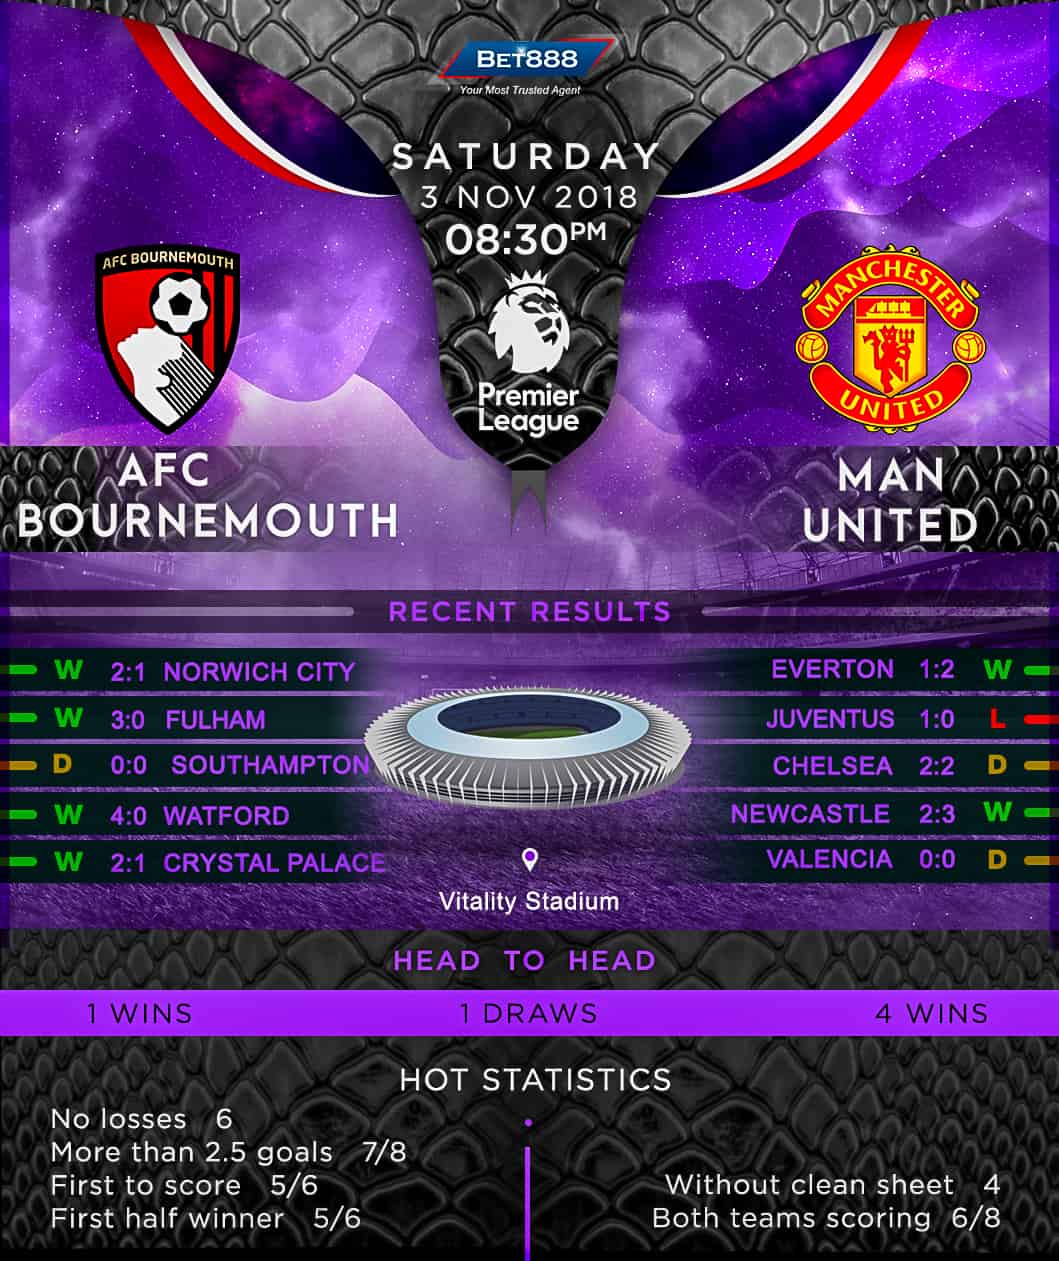 Bournemouth vs Manchester United 03/11/18